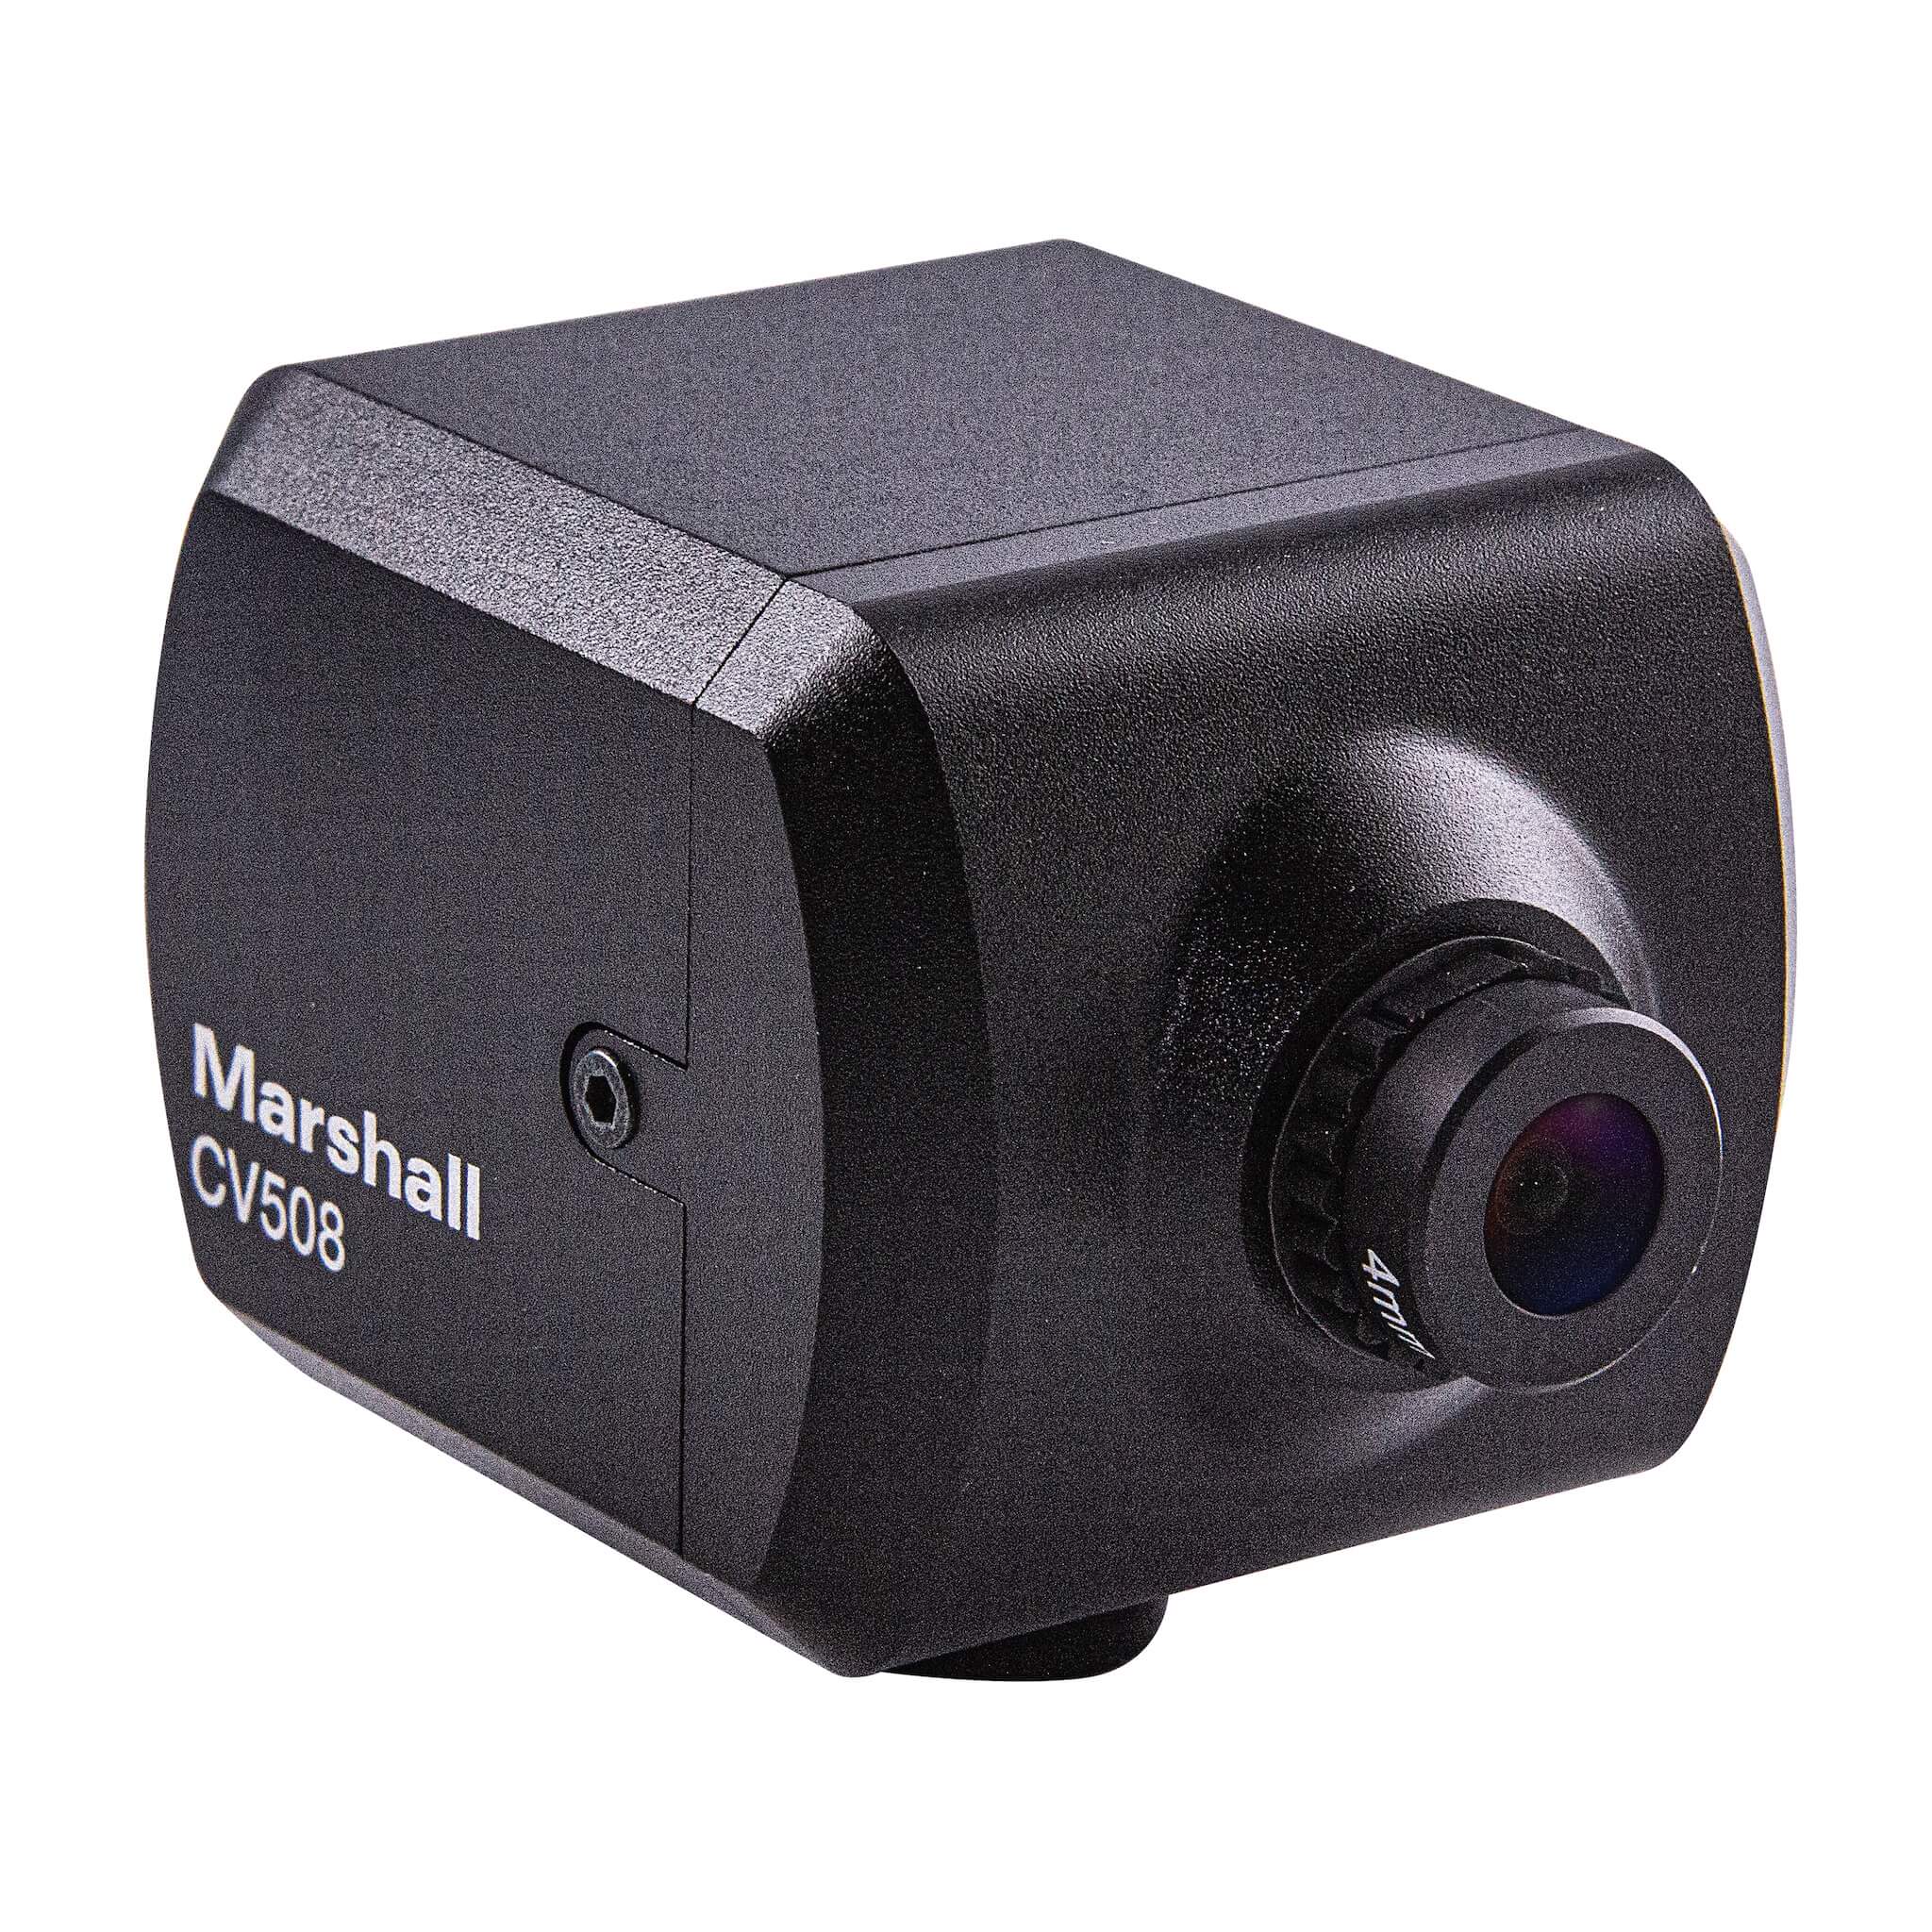 Marshall CV508 - Micro Full-HD POV Video Camera with HDMI/3GSDI, angled right